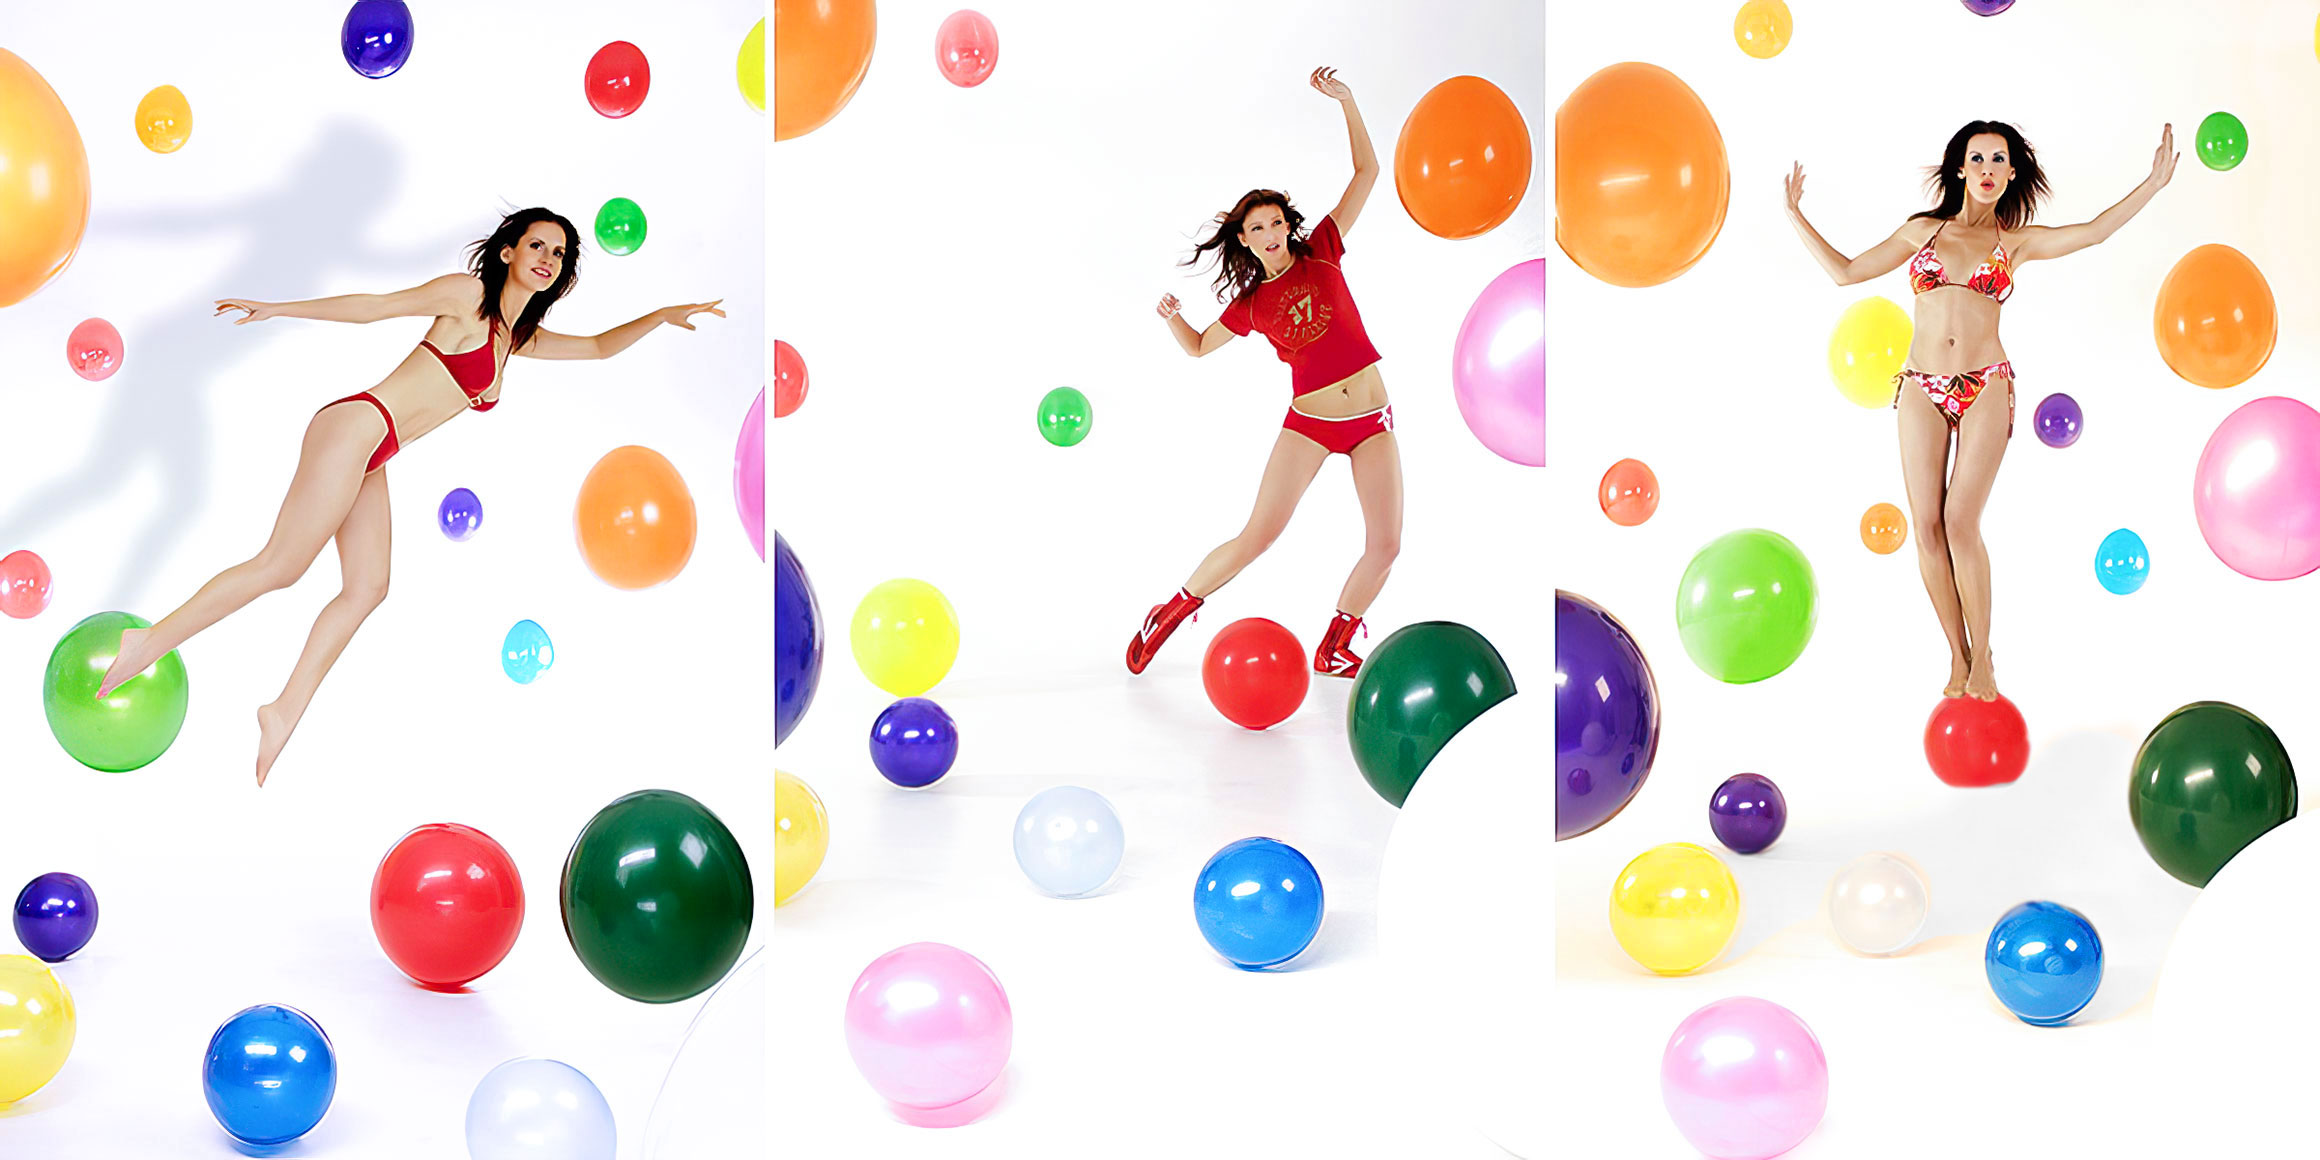 mode-fotograf-stuttgart-fotostudio-luftballone-schwebend